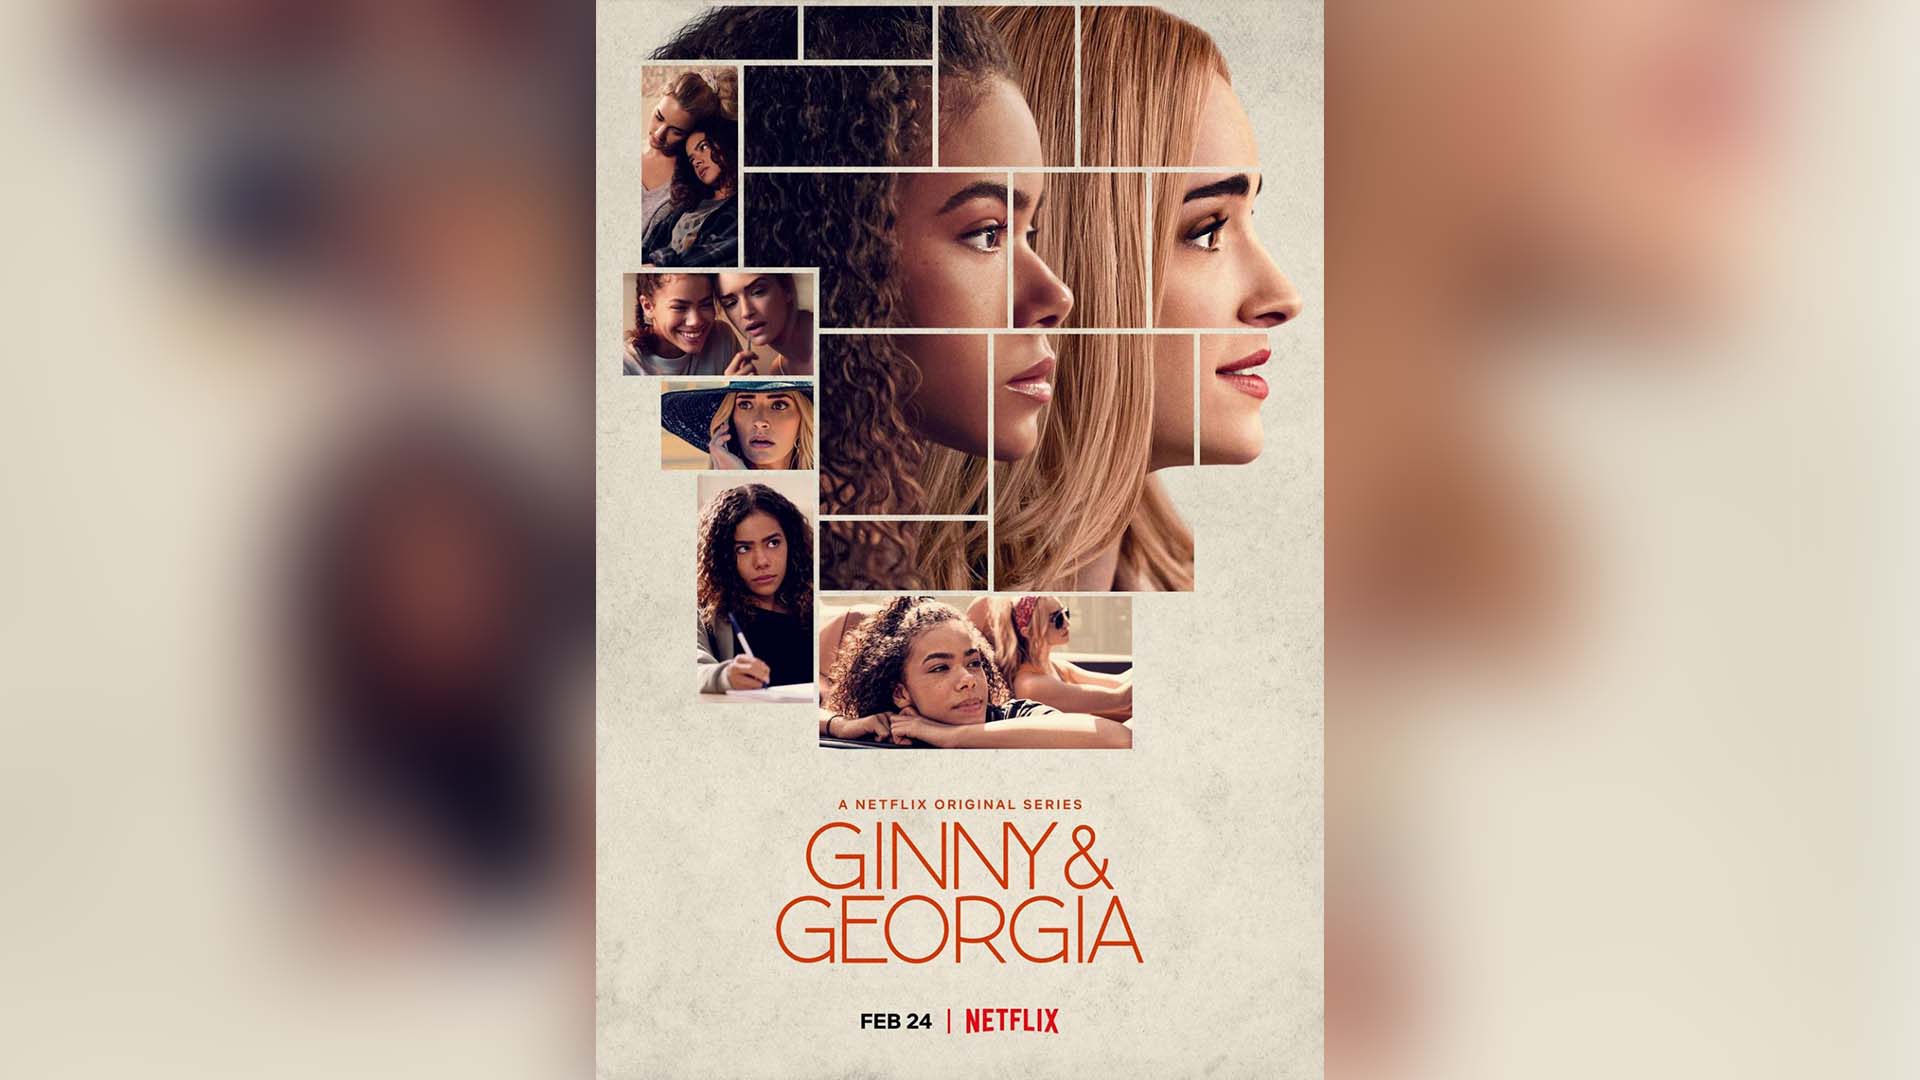 Ginny & georgia